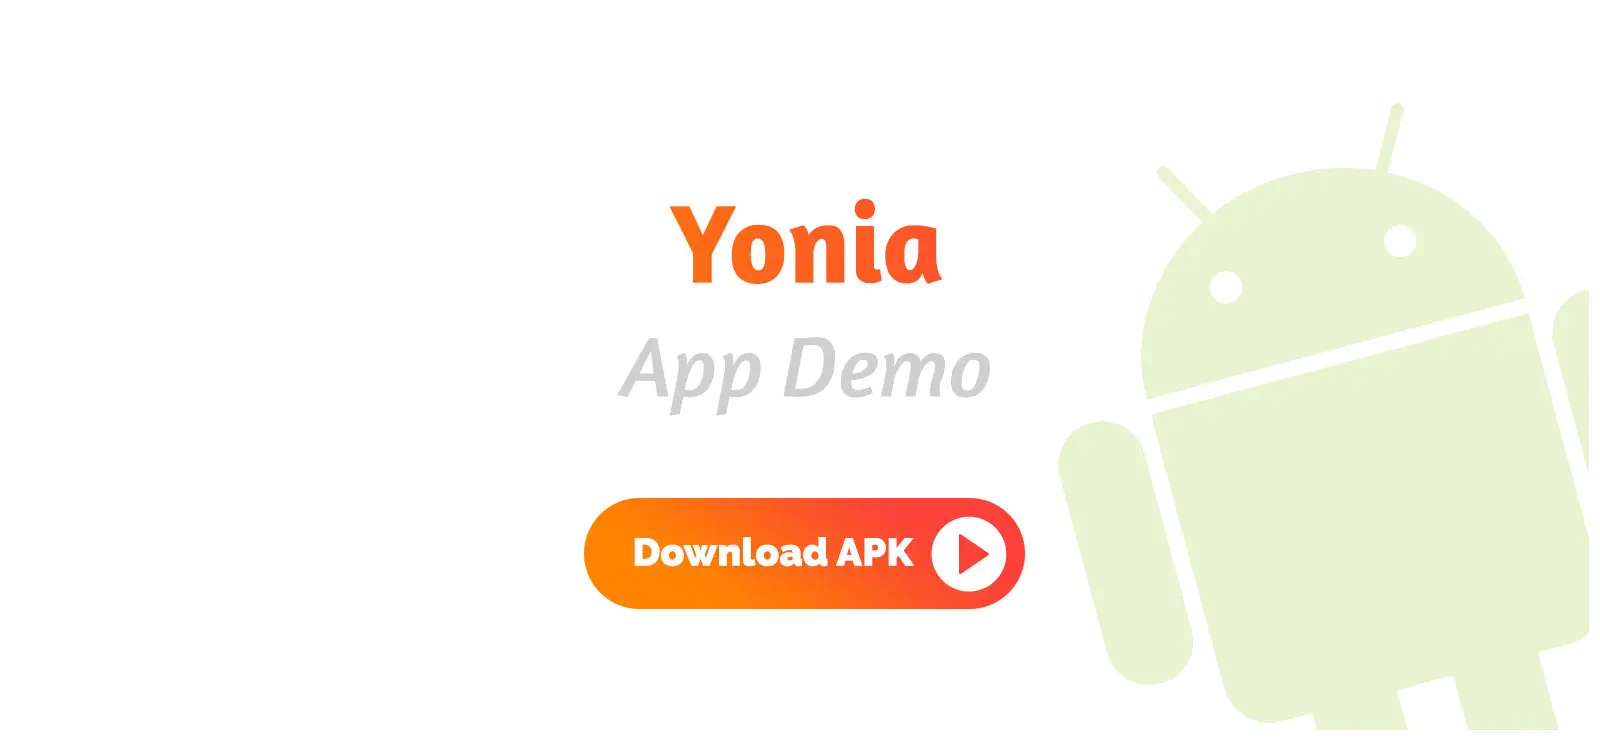 Yonia - Complete React Native Recipes App + Admin Panel - 4